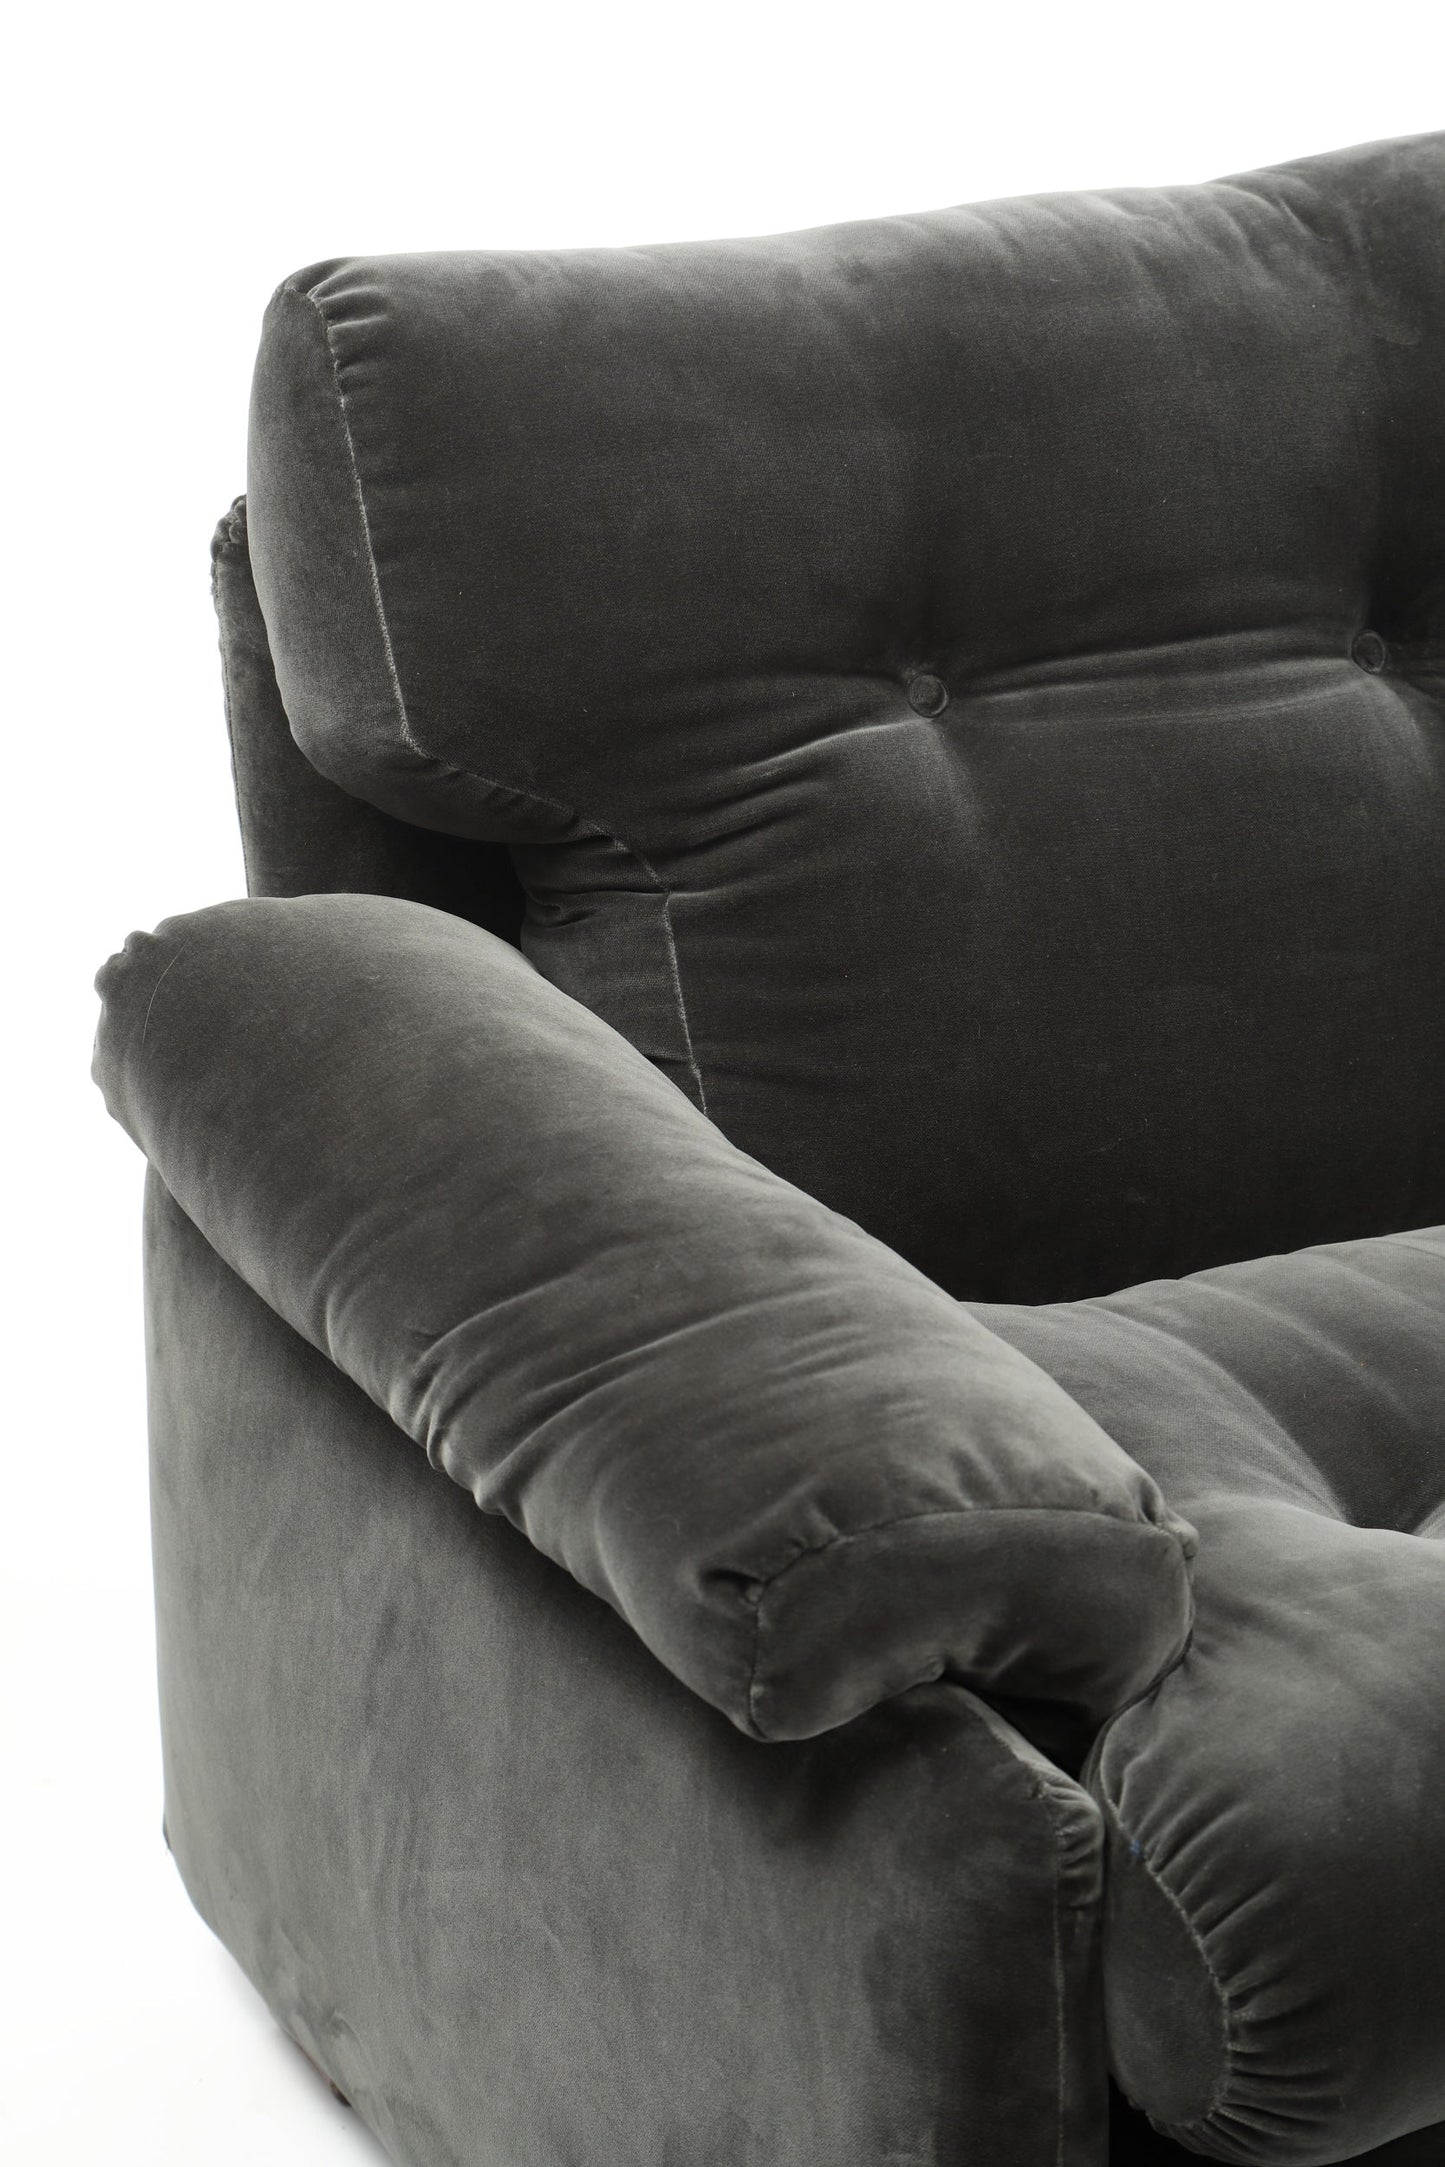 Afra &amp; Tobia Scarpa Coronado two-seater sofa in anthracite velvet